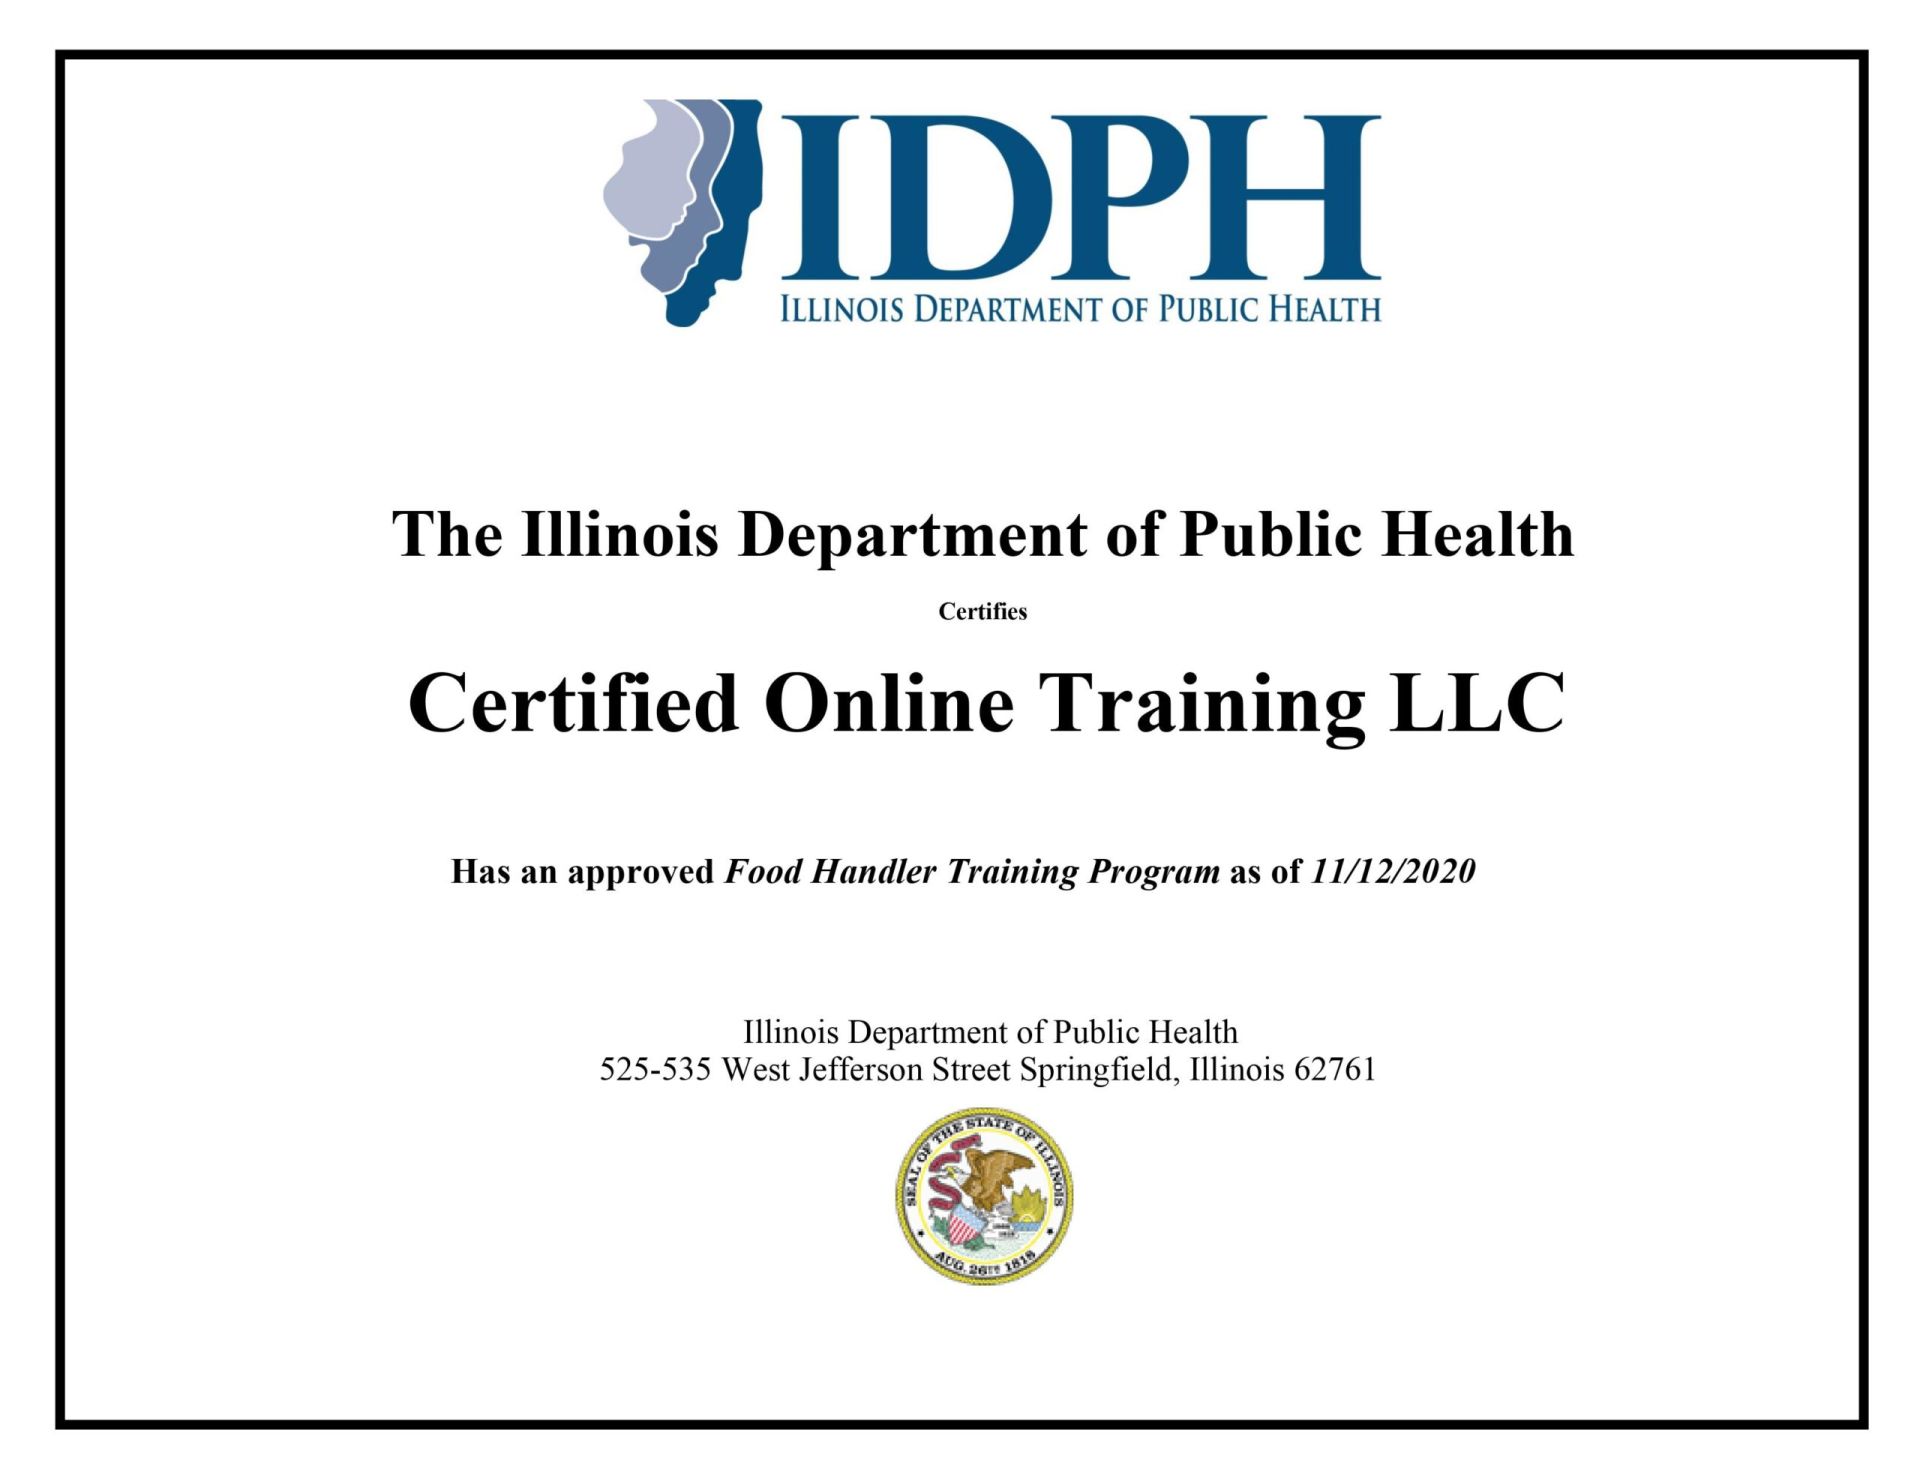 Illinois Department of Public Health (IDPH) Food Handler Training License